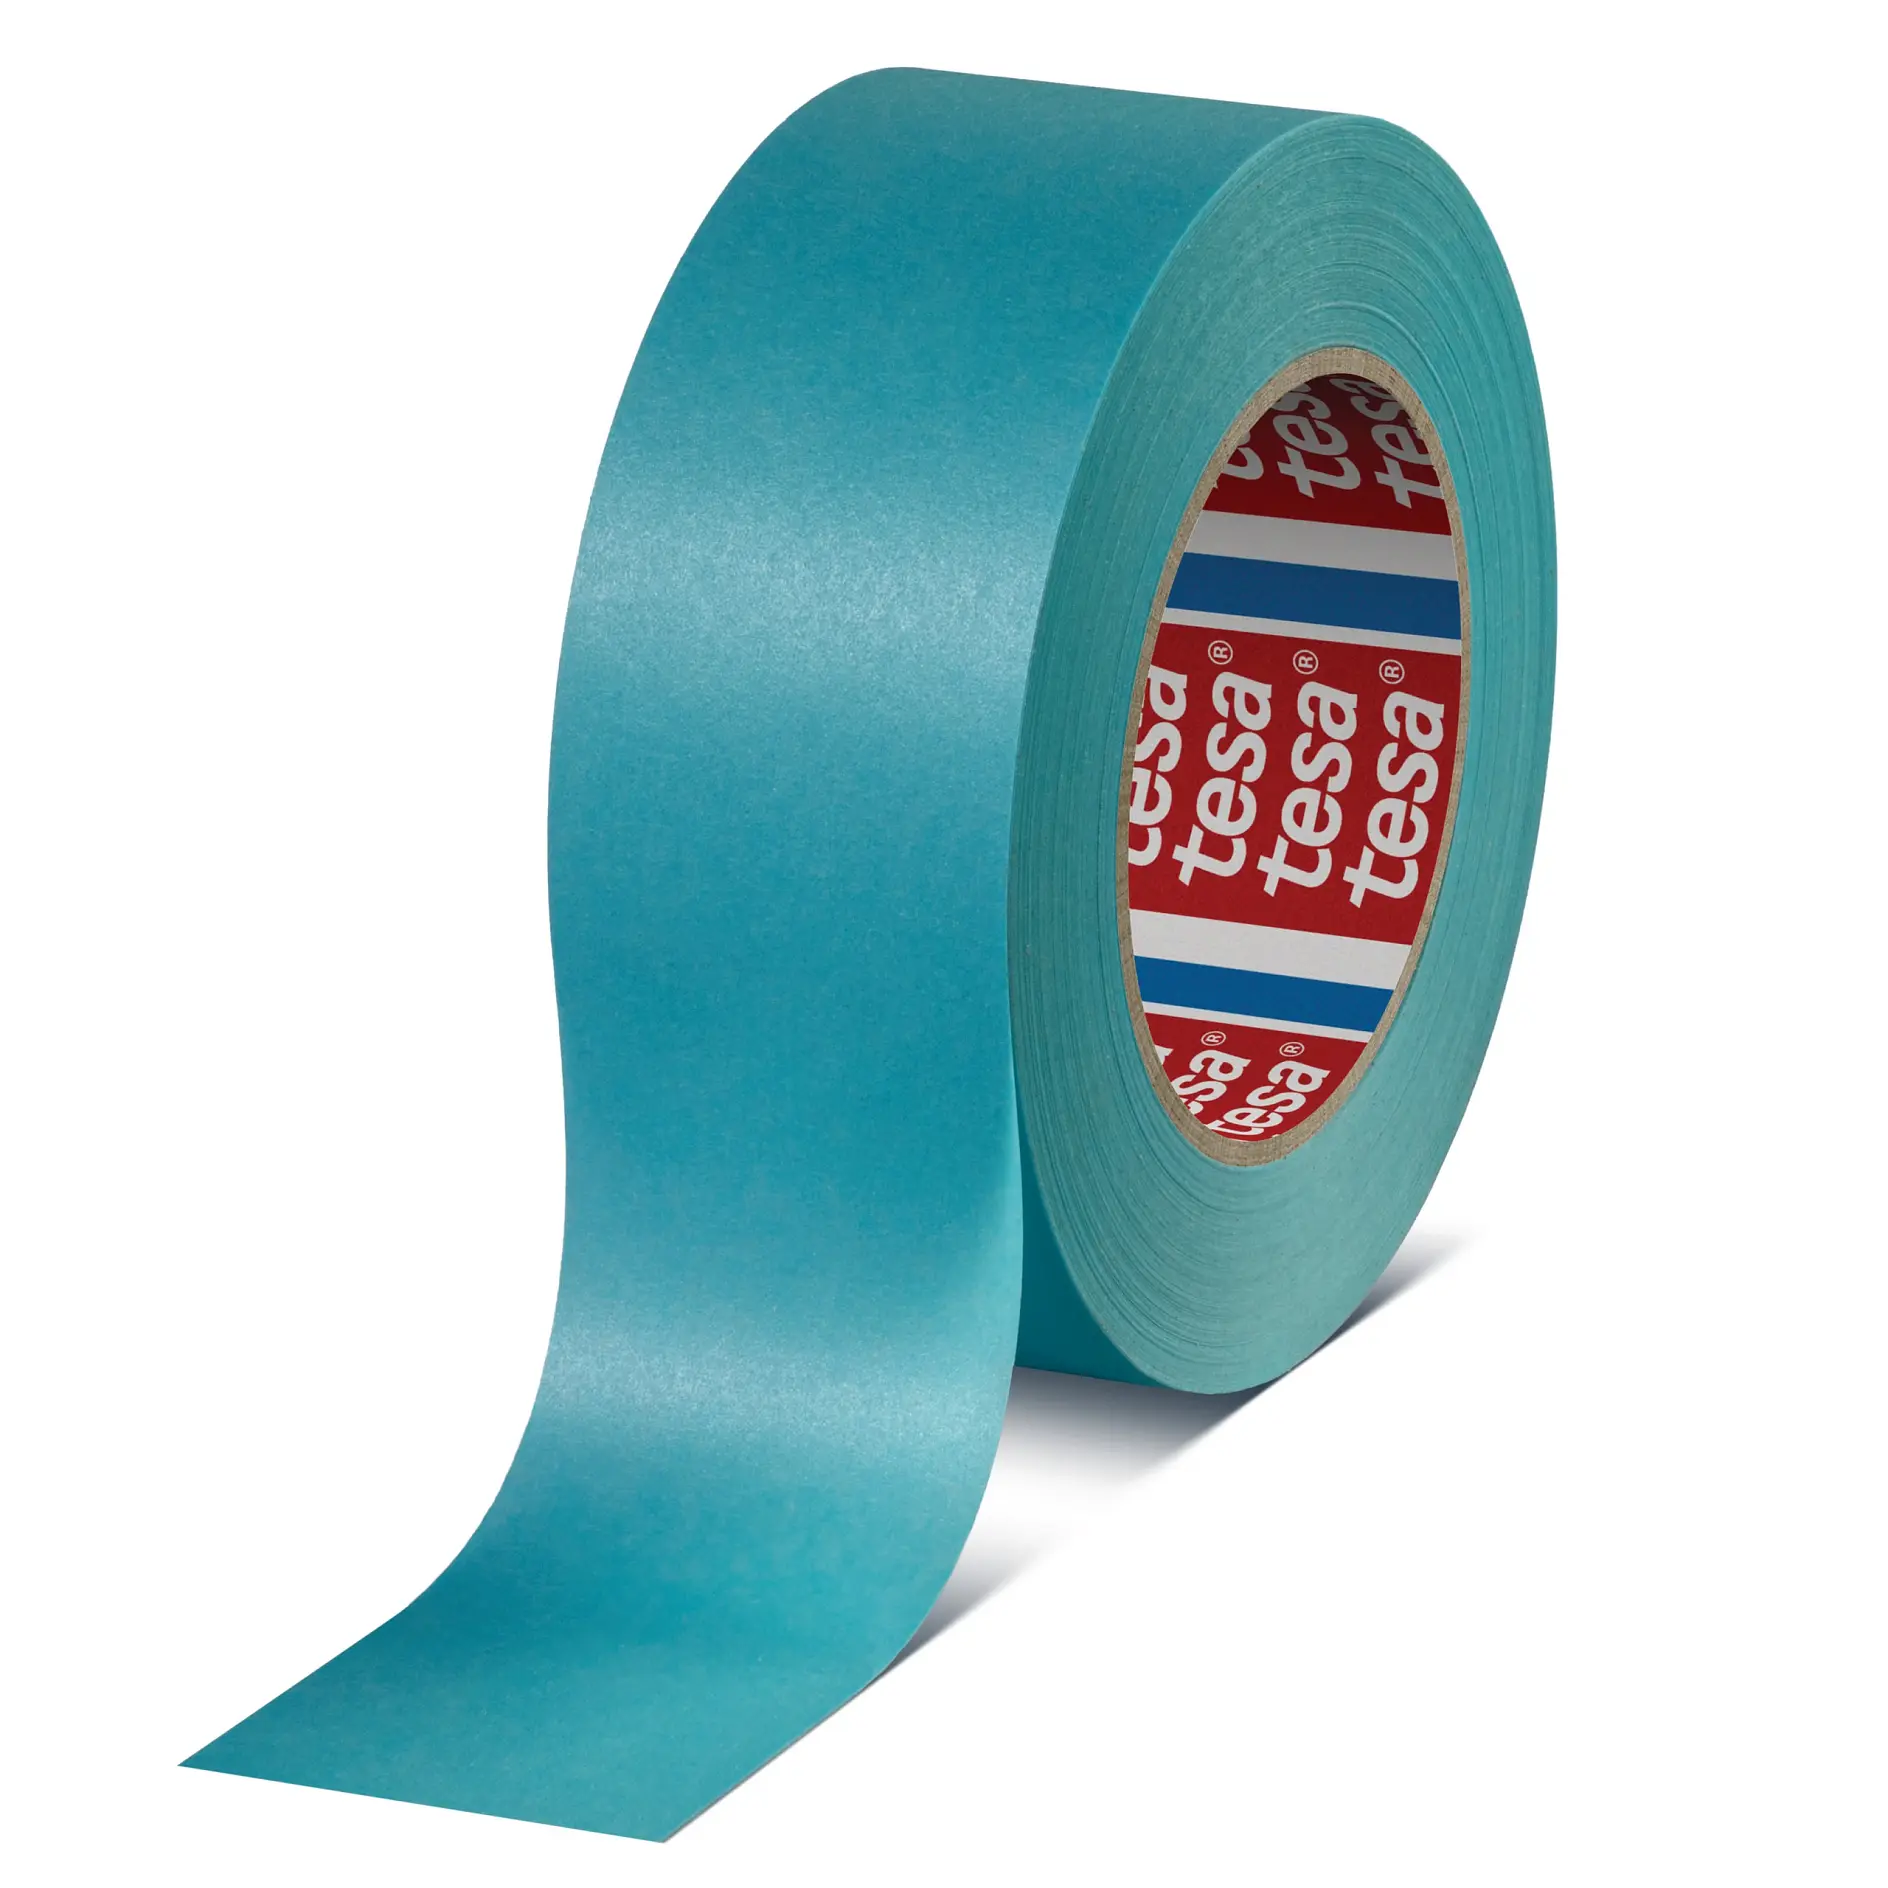 tesa-4438-UV-surface-protection-tape-blue-044380002000